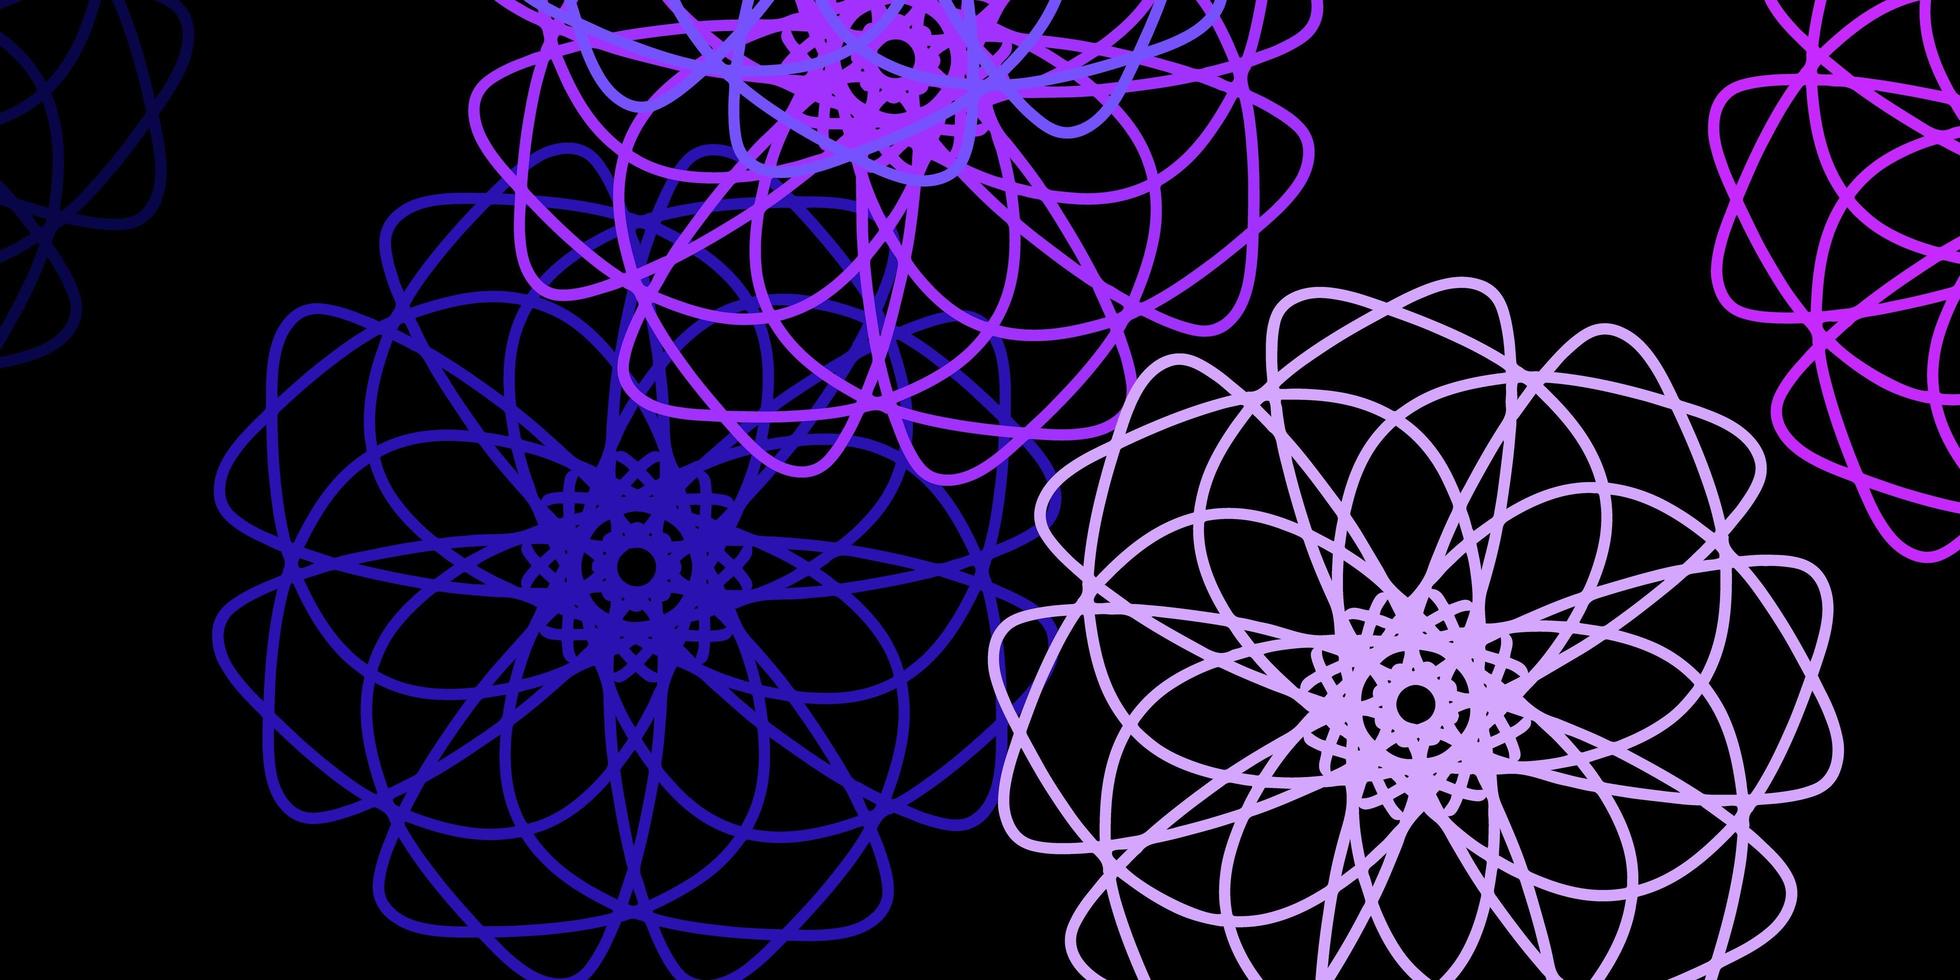 mörkrosa, blå vektorbakgrund med kaotiska former. vektor